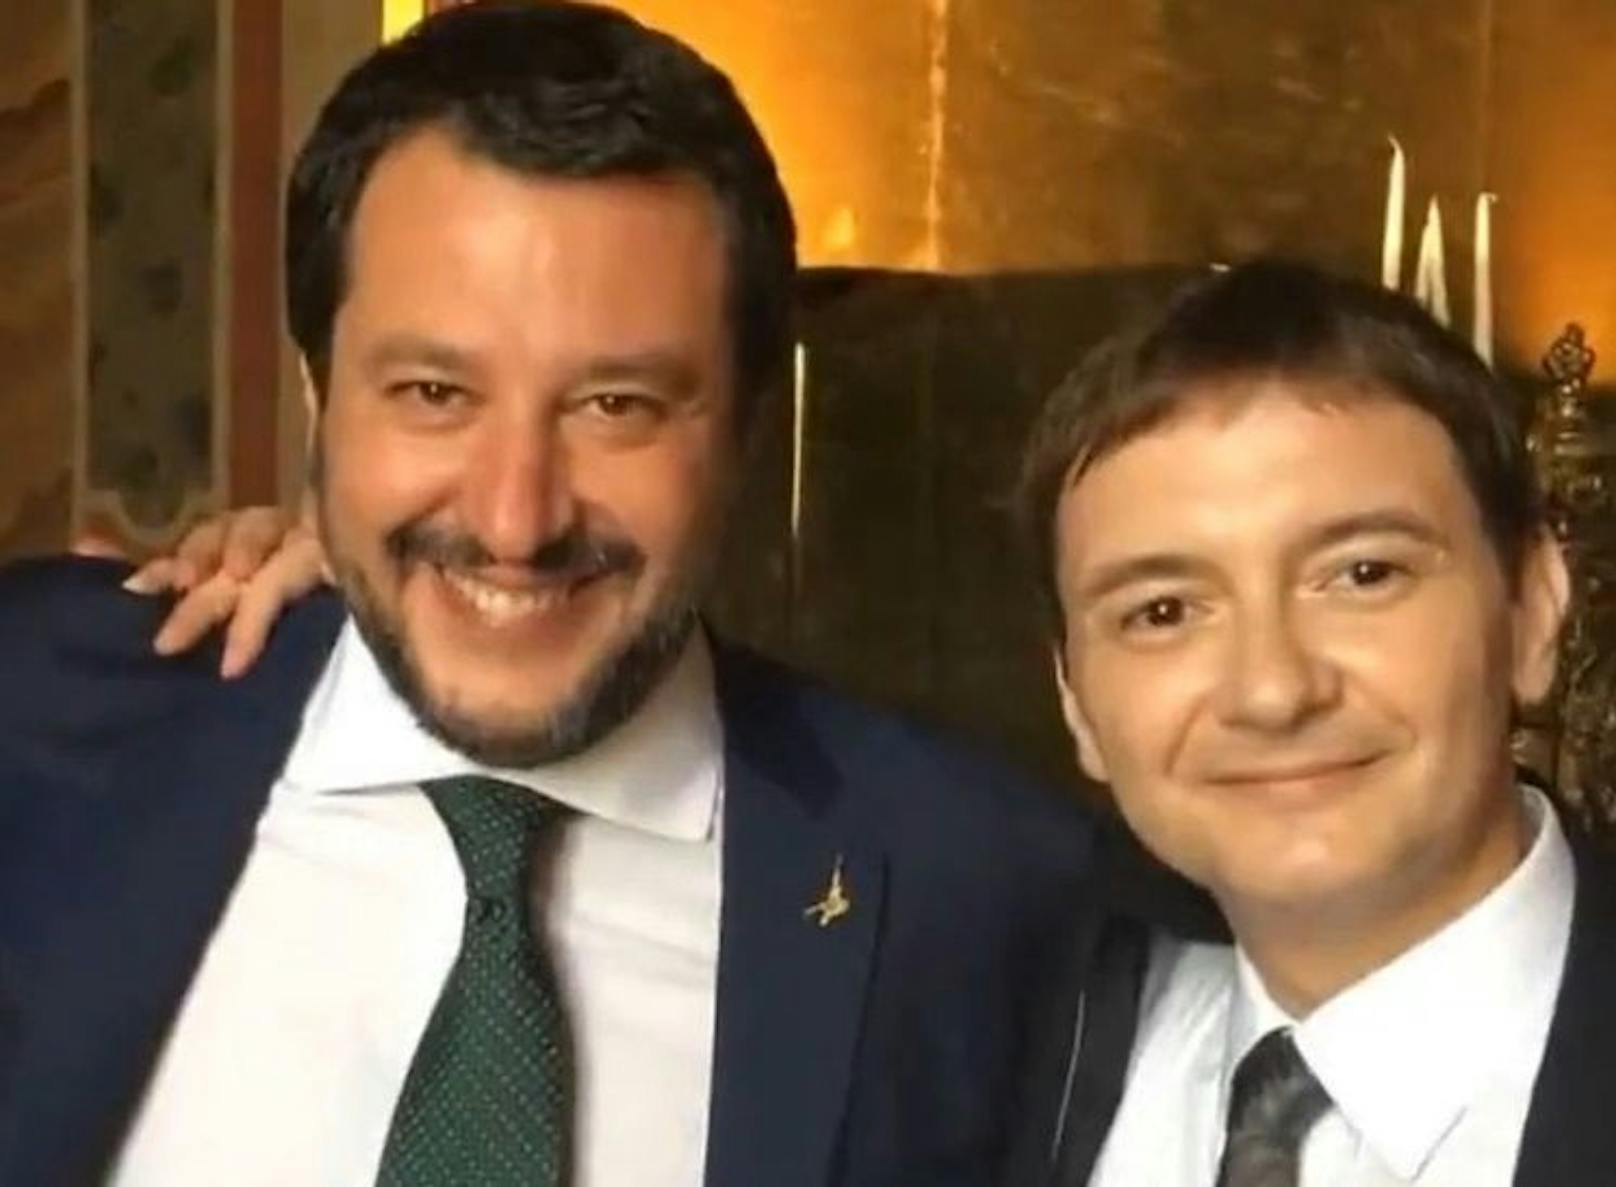 Matteo Salvini mit seinem Social-Media-Chef Luca Morisi